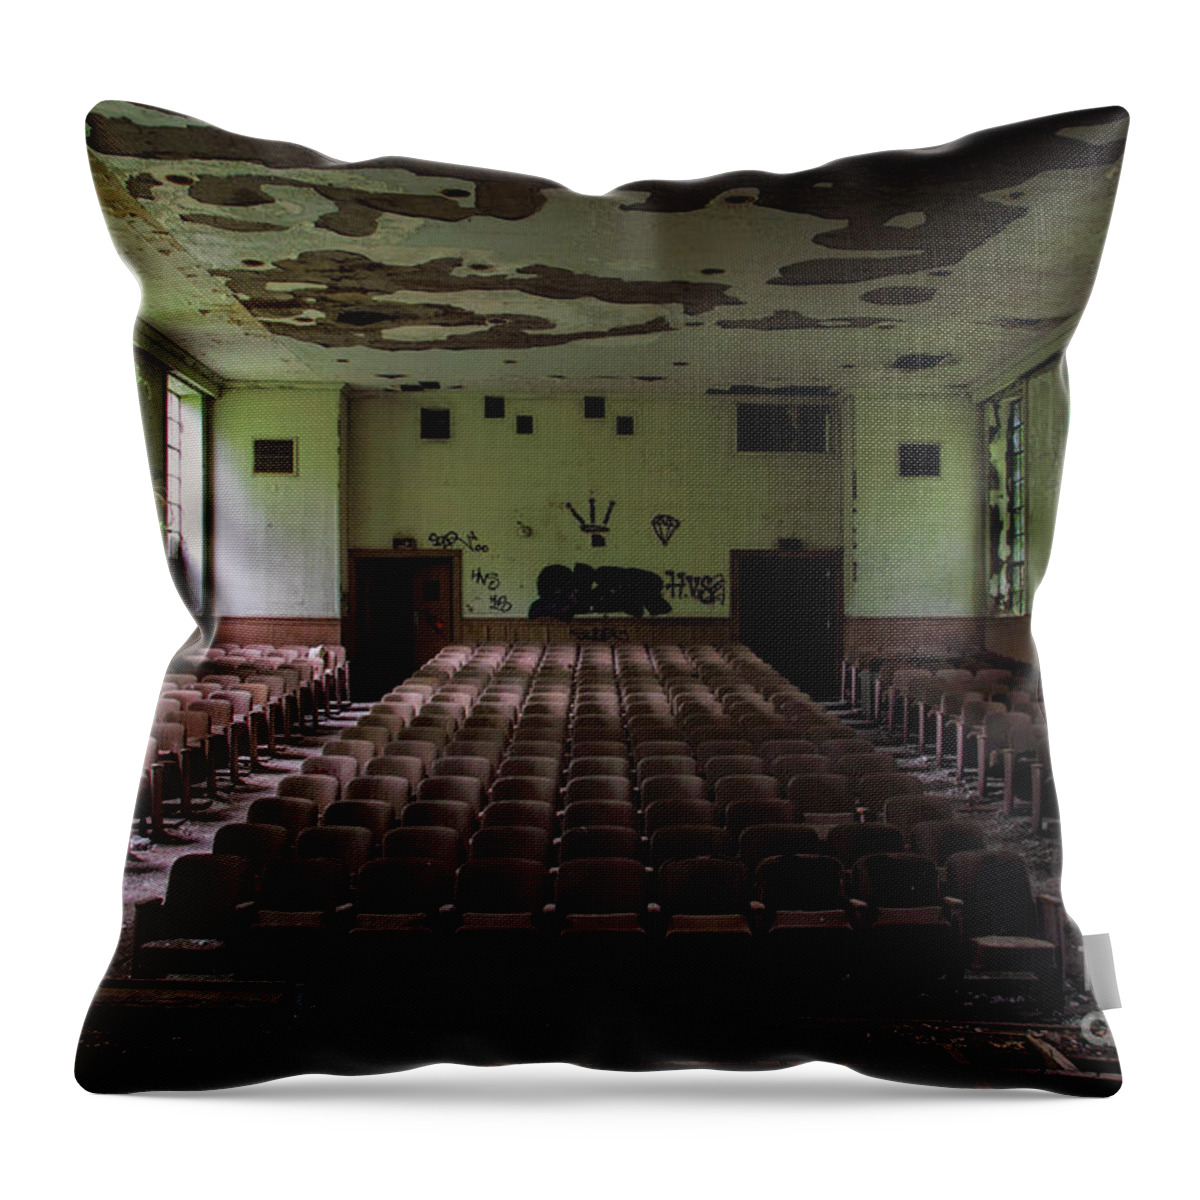 Bennett College Throw Pillow featuring the photograph Rear View #1 by Rick Kuperberg Sr